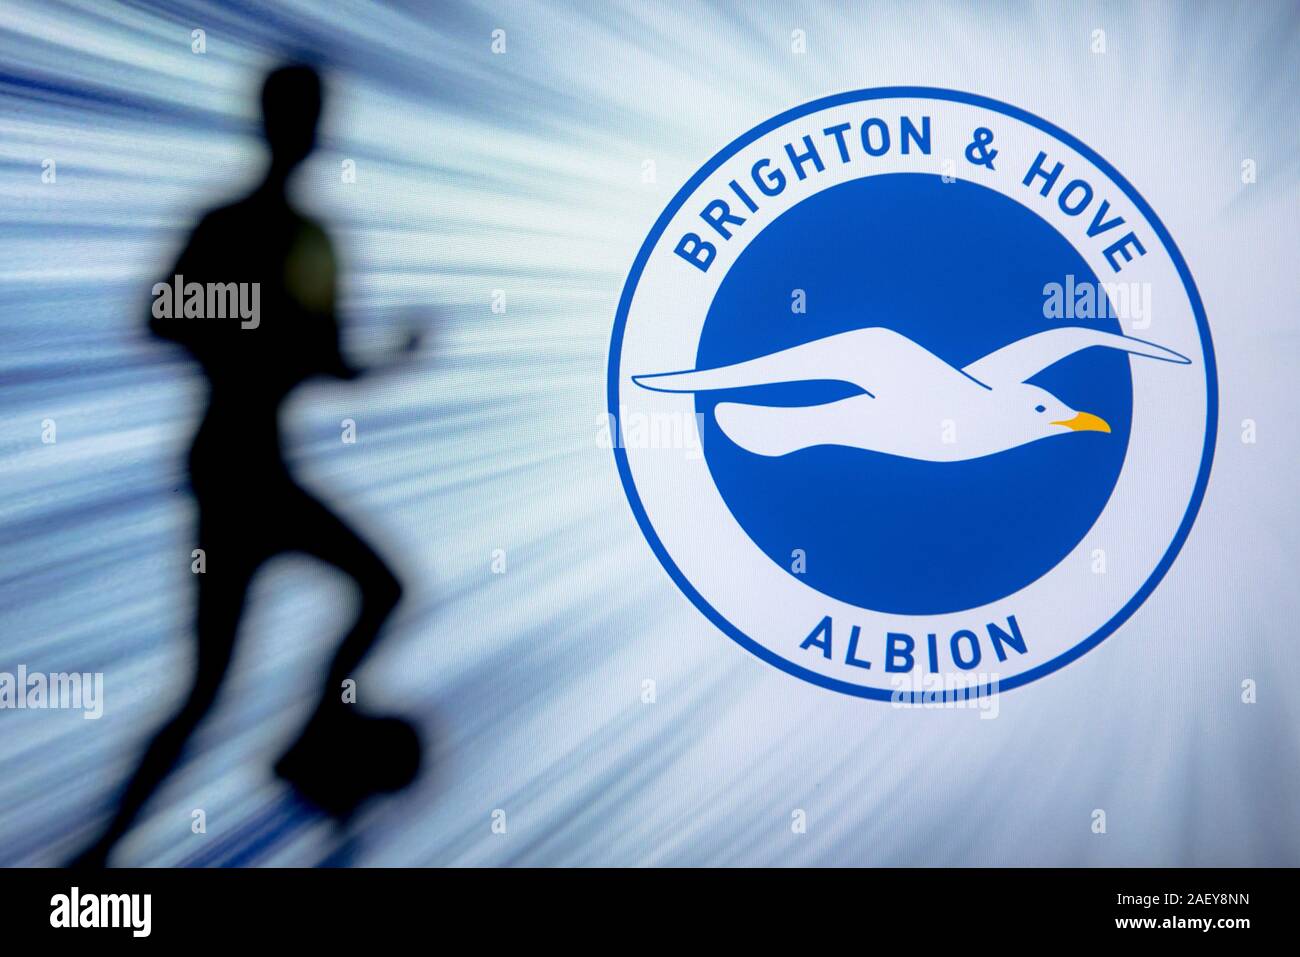 BRIGHTON, ENGLAND, JULY. 1. 2019: Brighton Hove Albion Football club logo, Premier League, England. Soccer player silhouette. Stock Photo